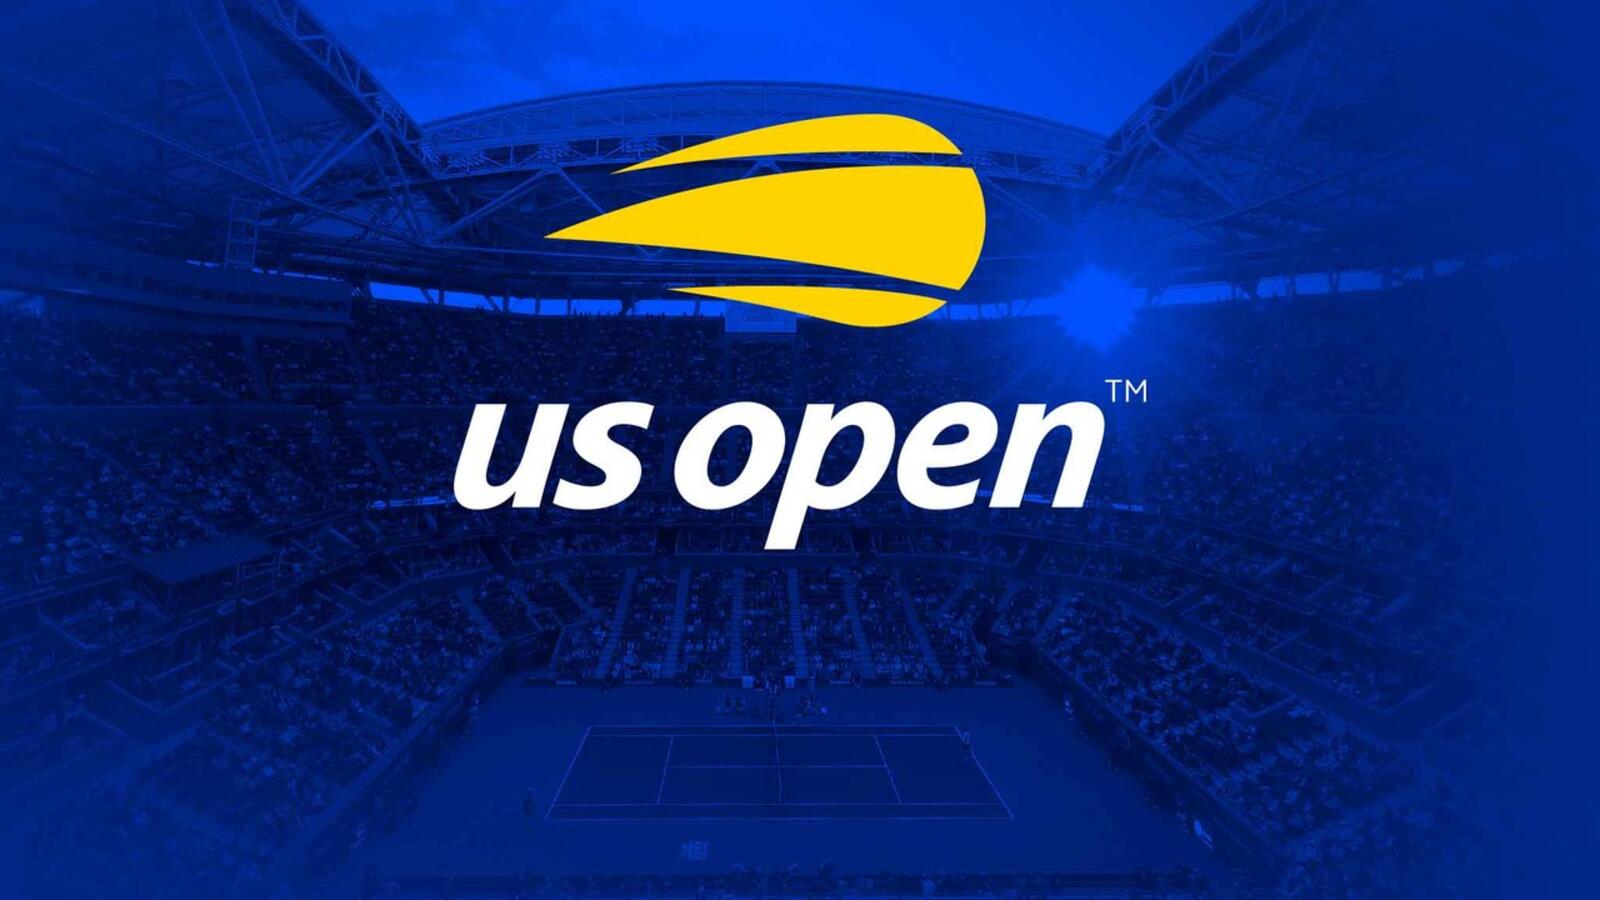 US Open Tennis Wallpapers 4k, HD US Open Tennis Backgrounds on